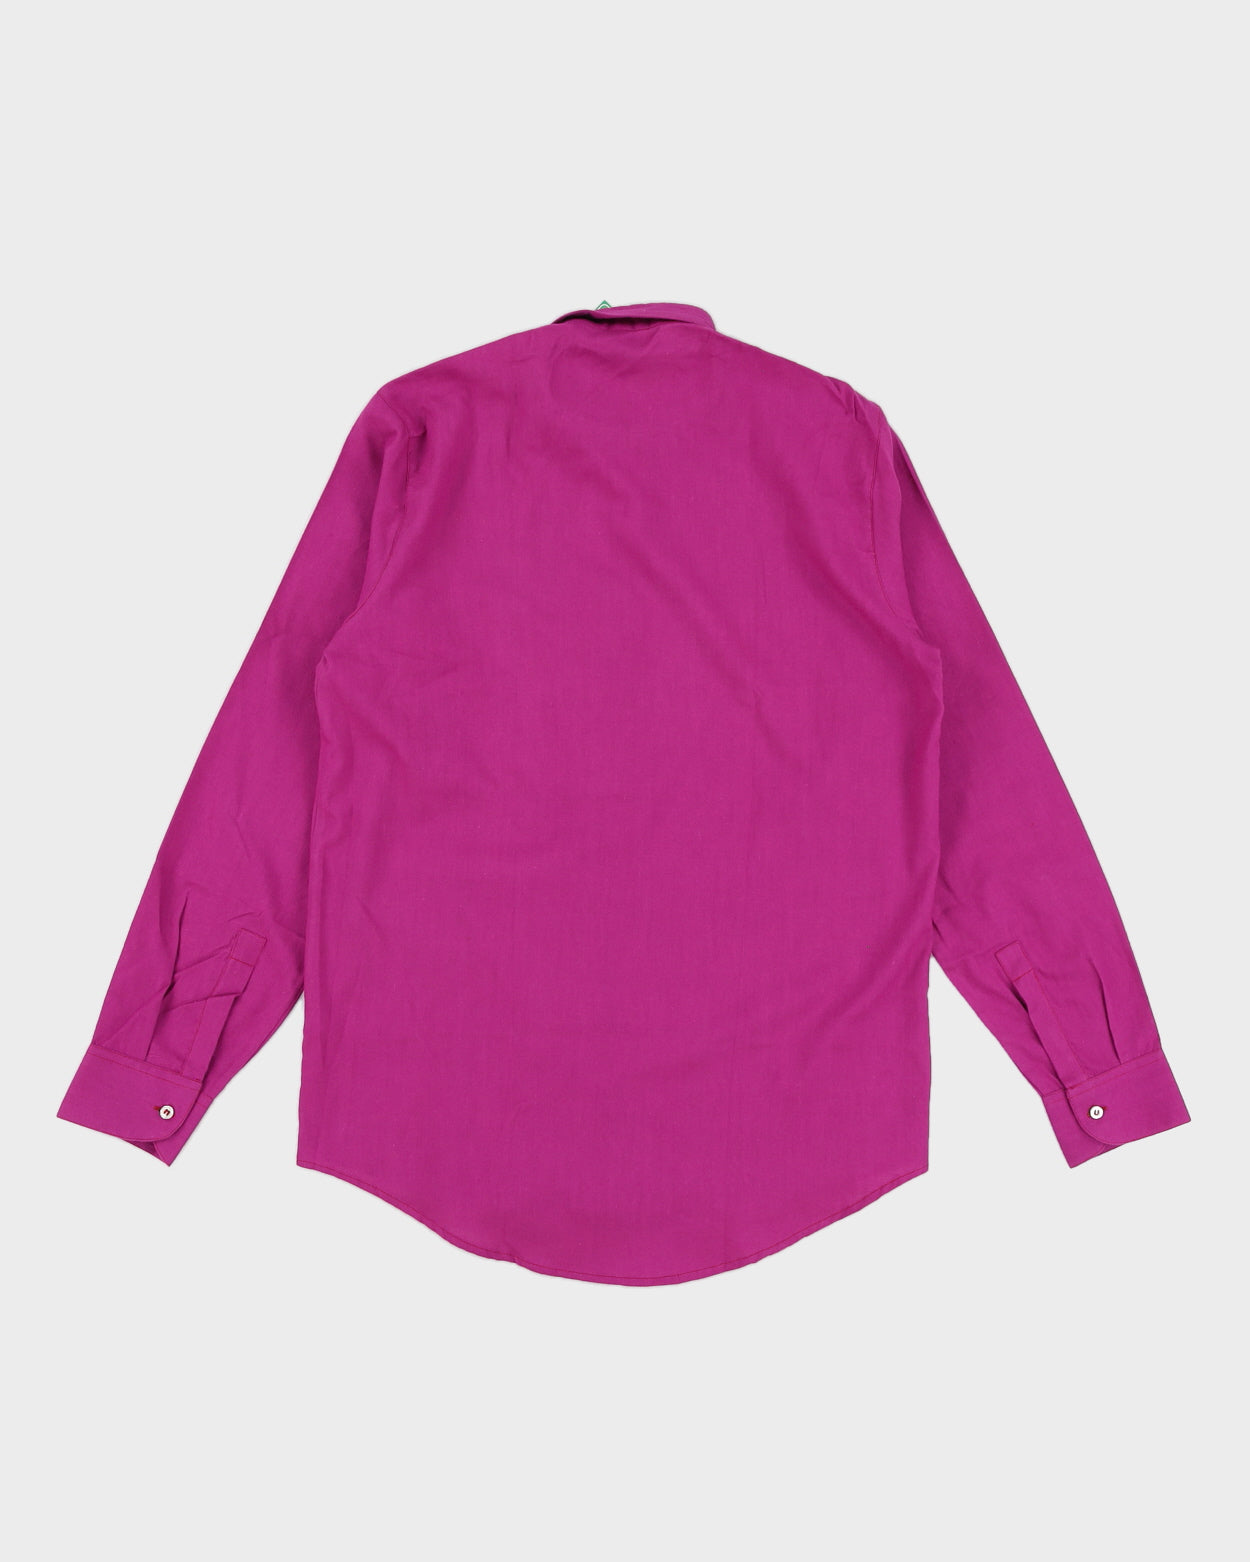 Vintage 70s Benetton Purple Dress Shirt - M